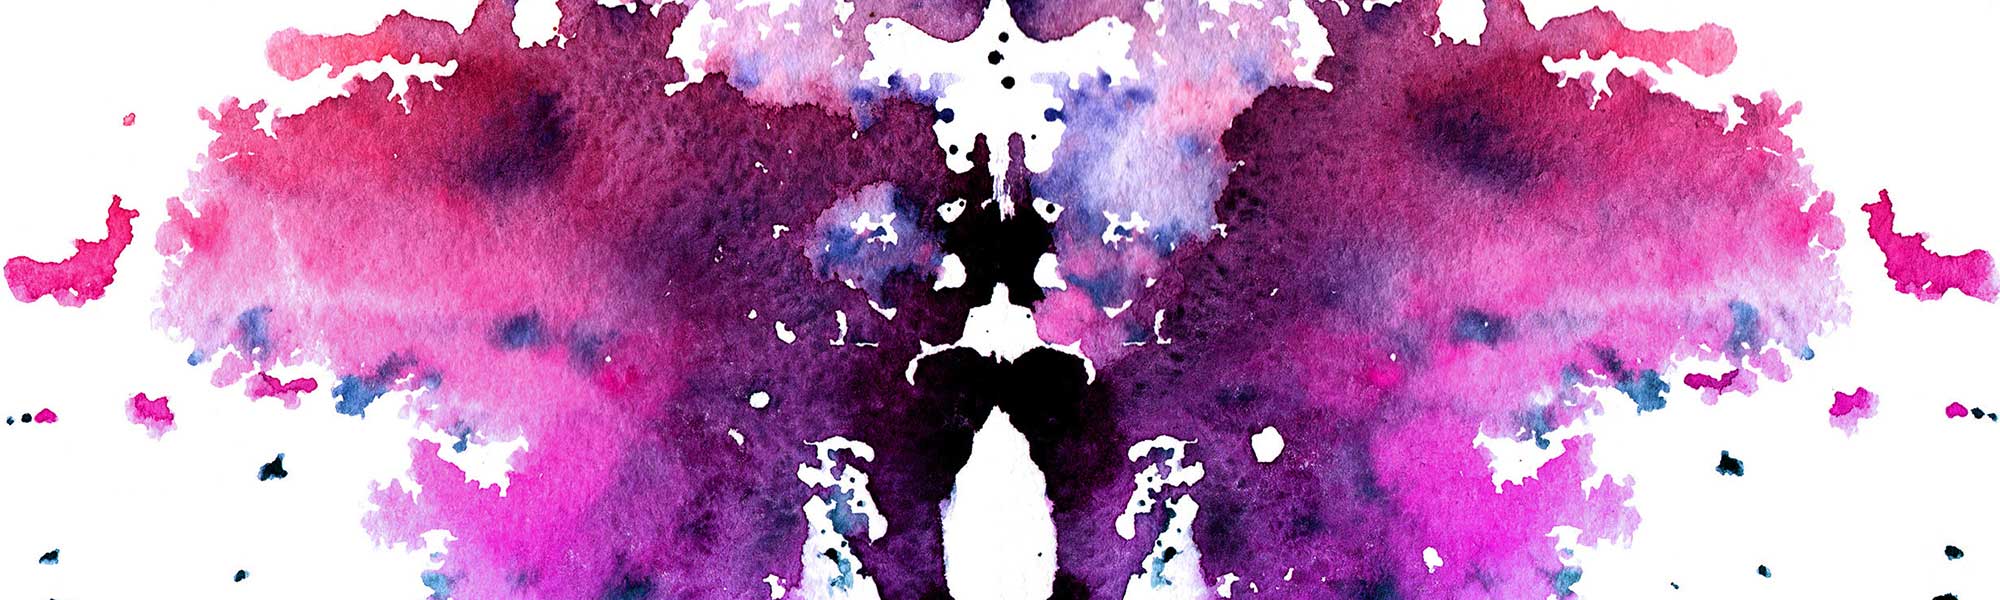 Red-purple watercolor symmetrical Rorschach blot